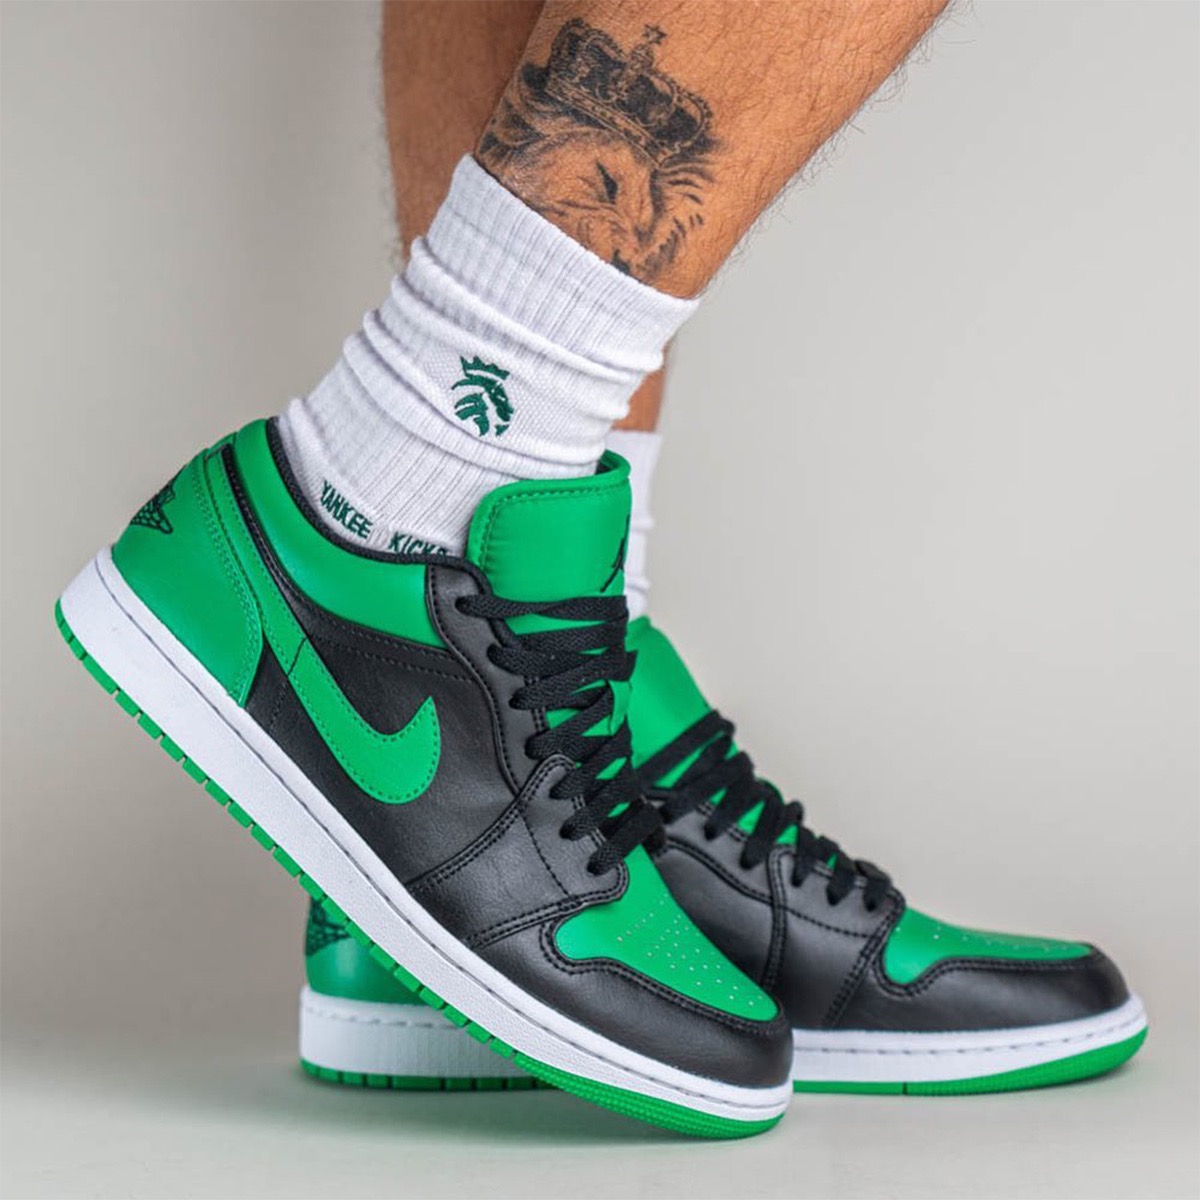 Nike Air Jordan 1 Low “Black/Lucky Green”が国内4月15日に発売予定